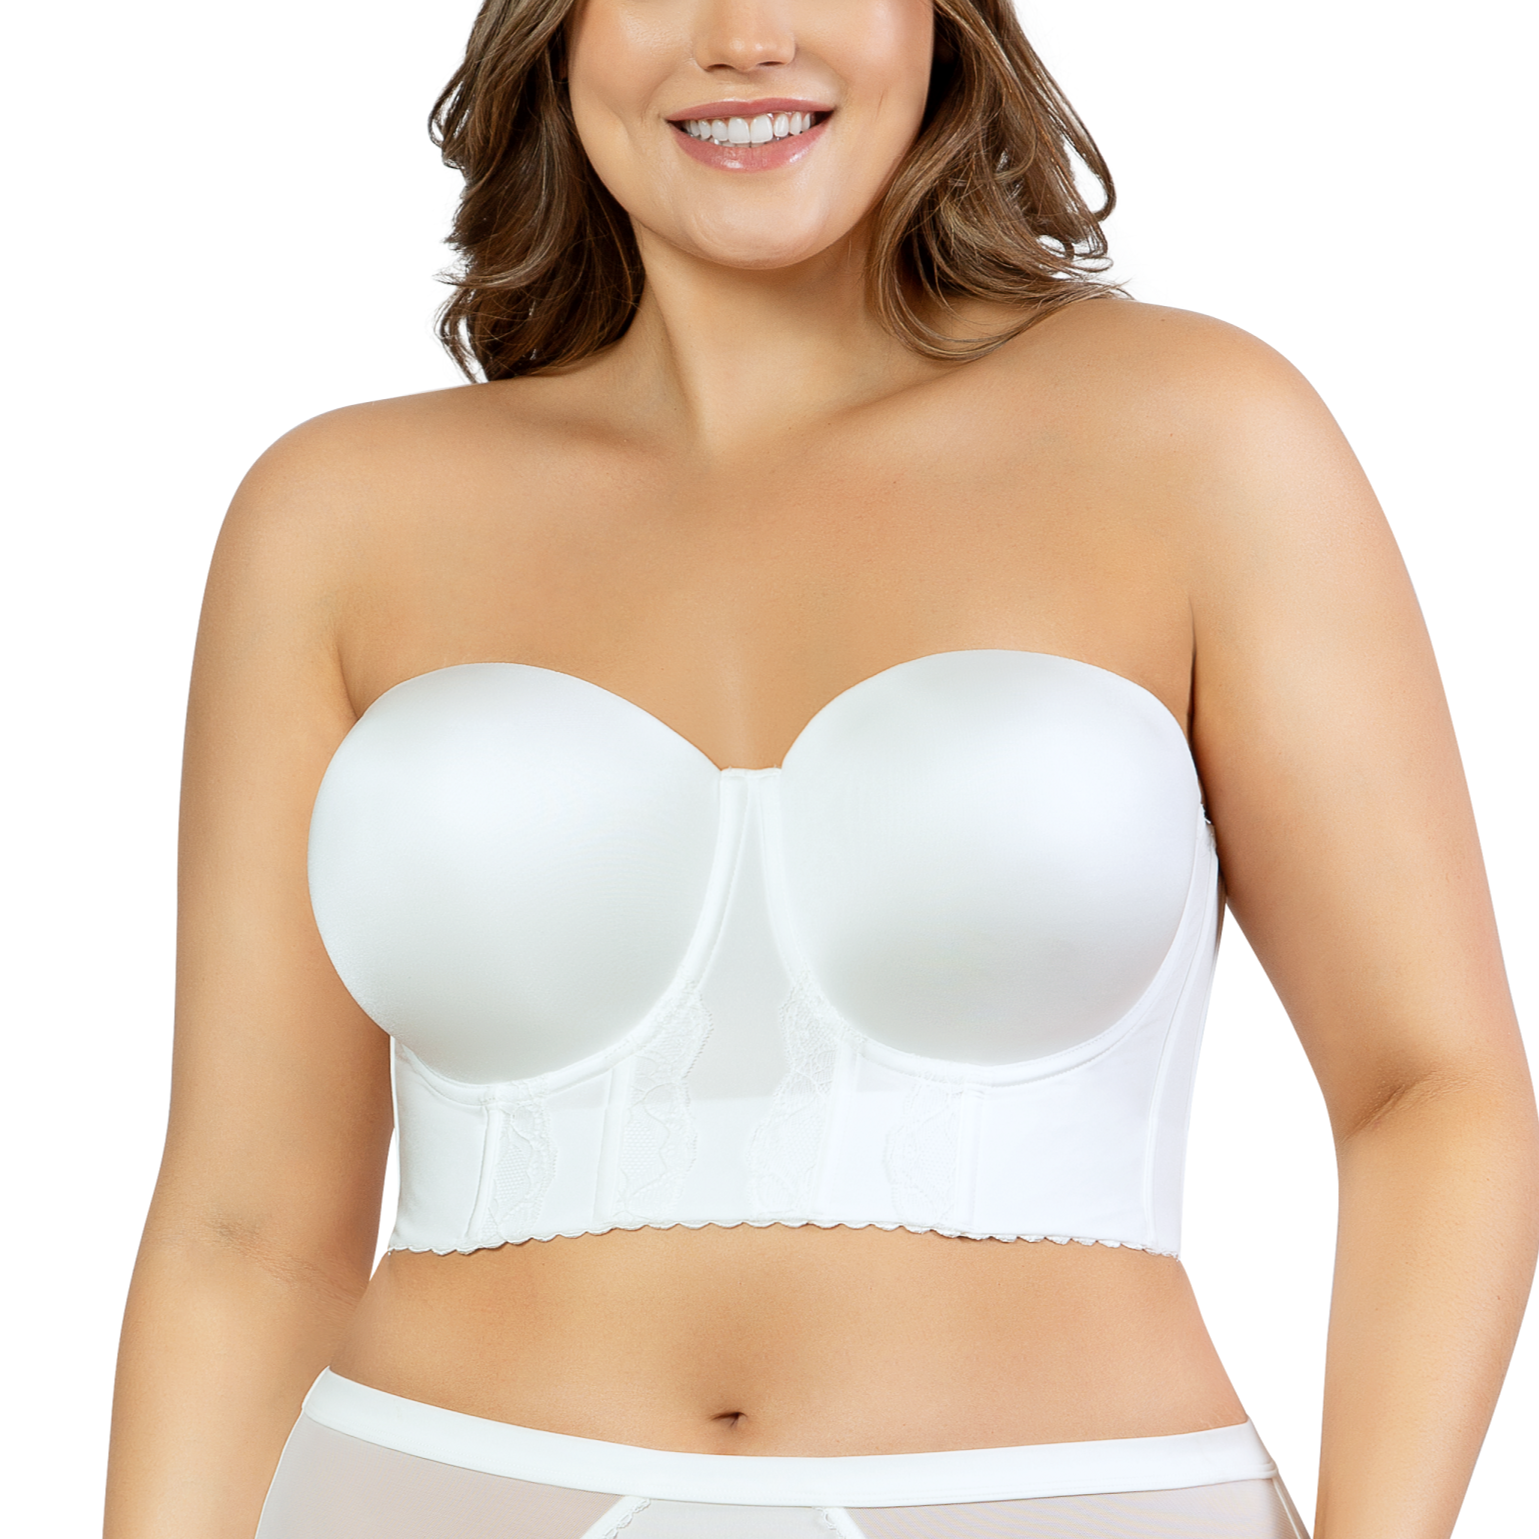 How to measure for a bra or bustier - ParfaitLingerie.com - Blog